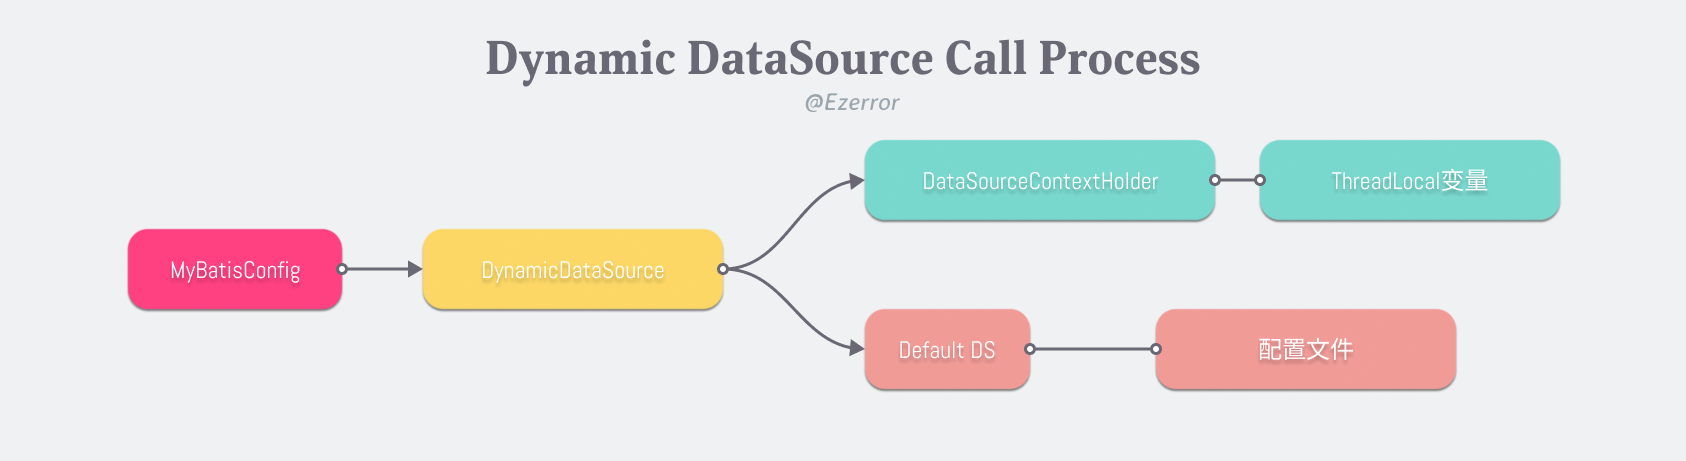 Dynamic DataSource Call Process